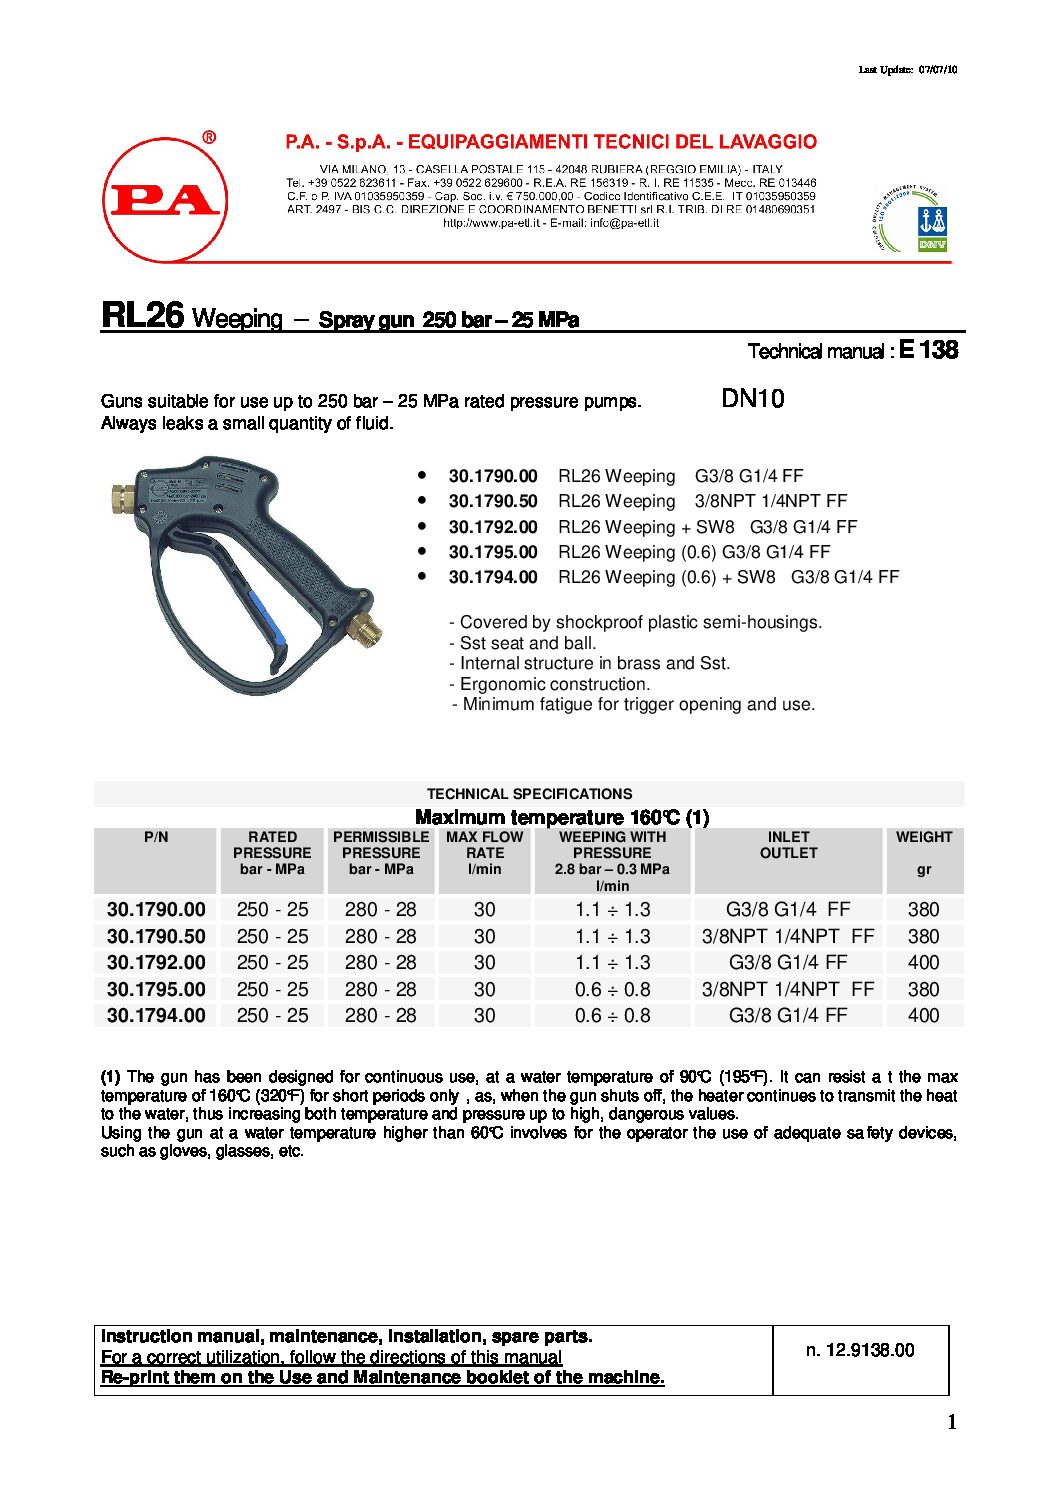 PA RL26 Weep gun technical information